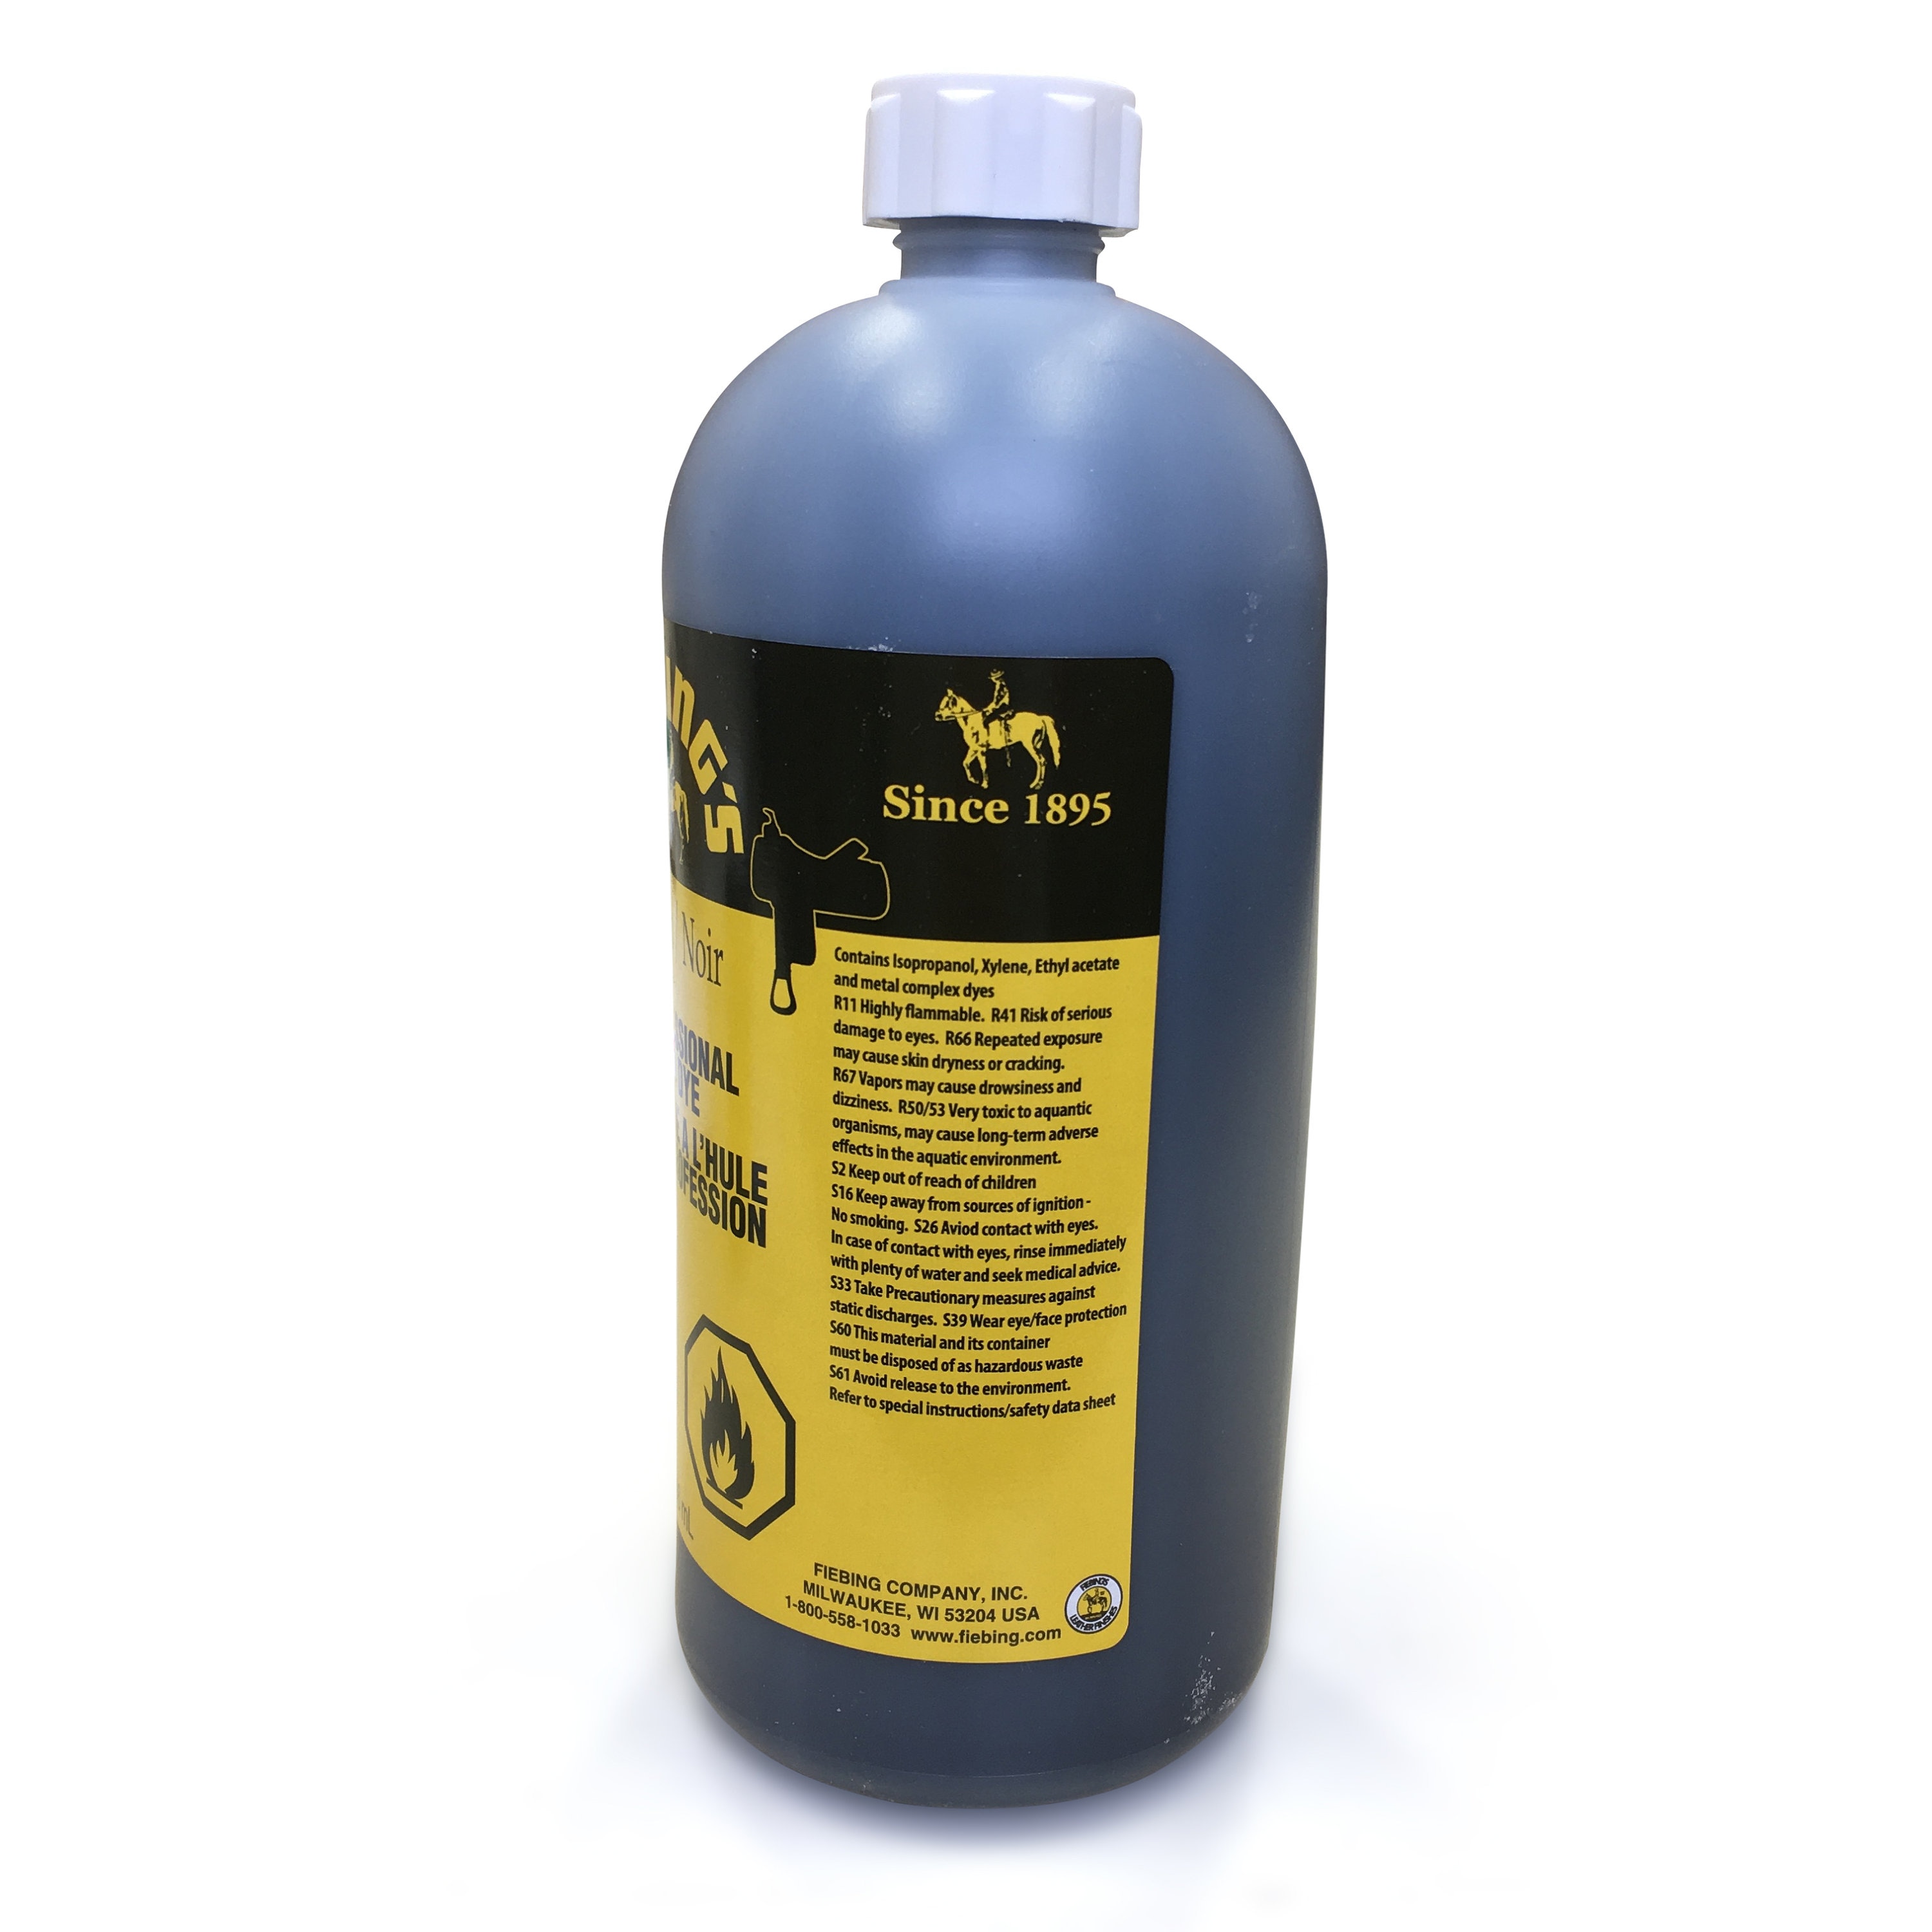 Lederfarbe Fiebing`s Professional Oil Dye schwarz, 11,35 €